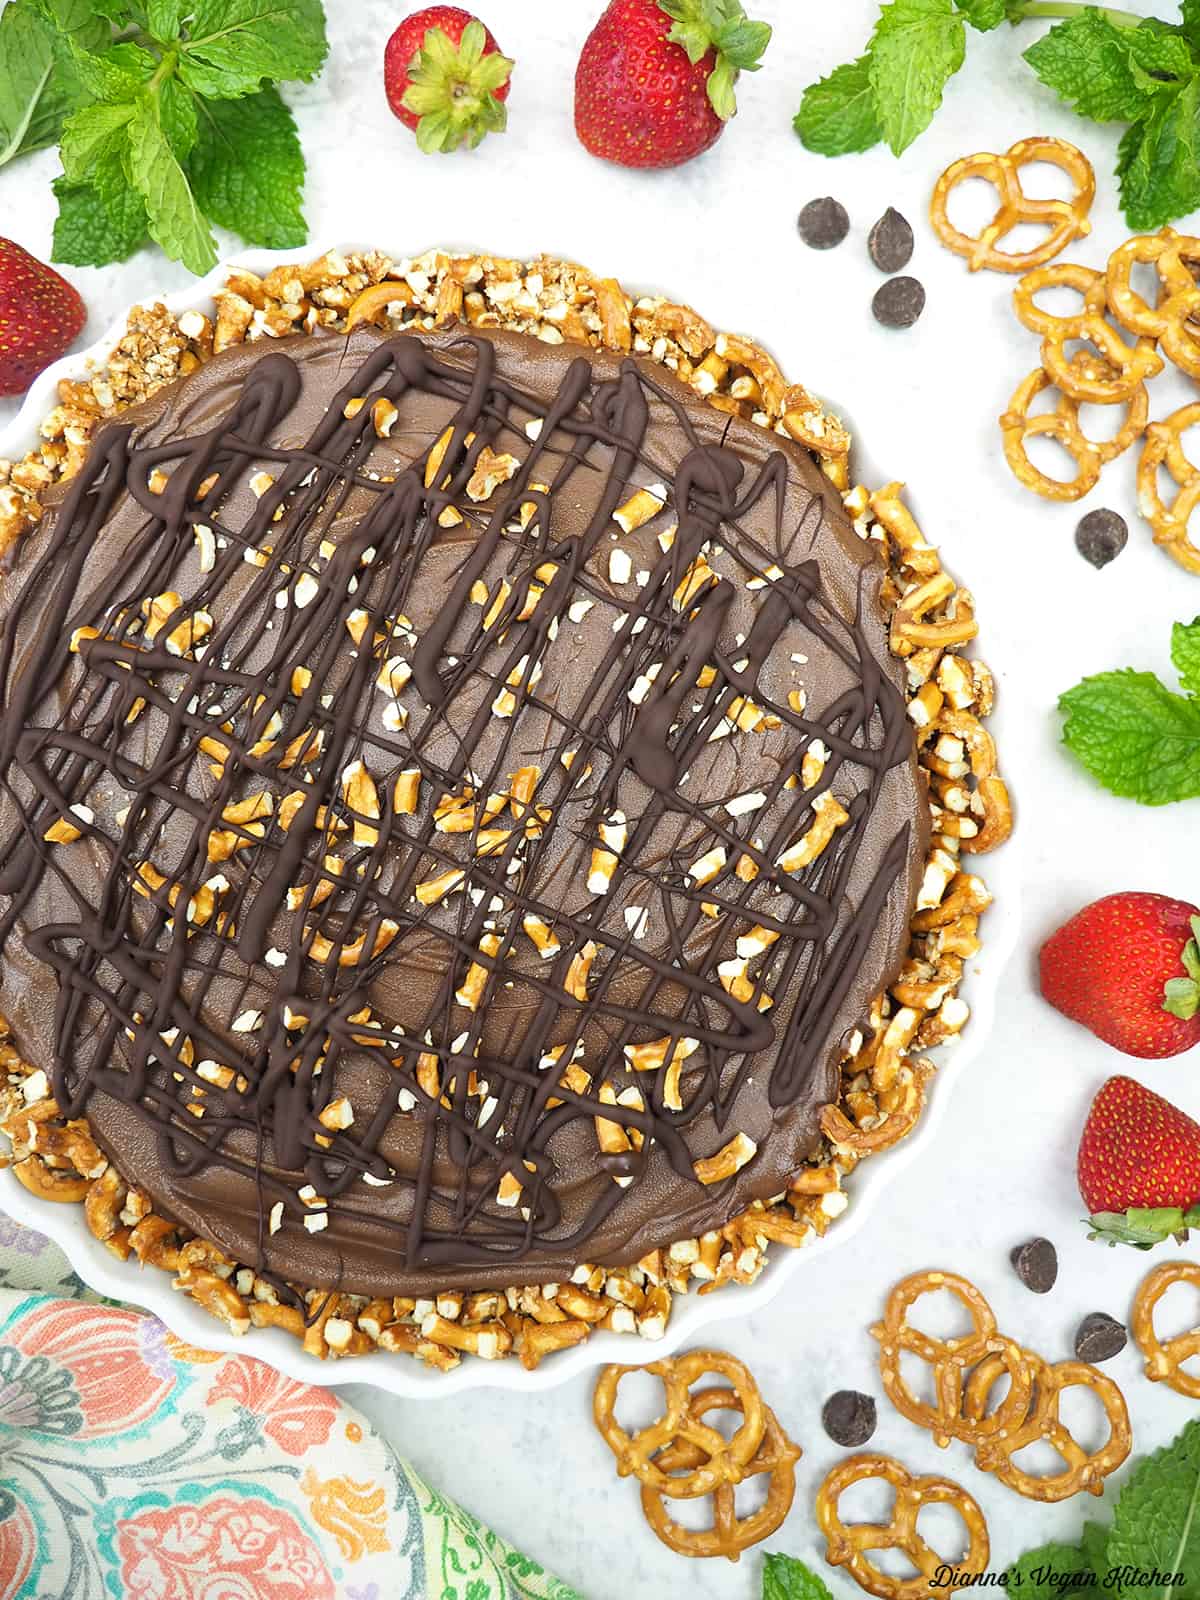 Chocolate Pretzel Pie with mint, strawberries, chocolate chips, and pretzels